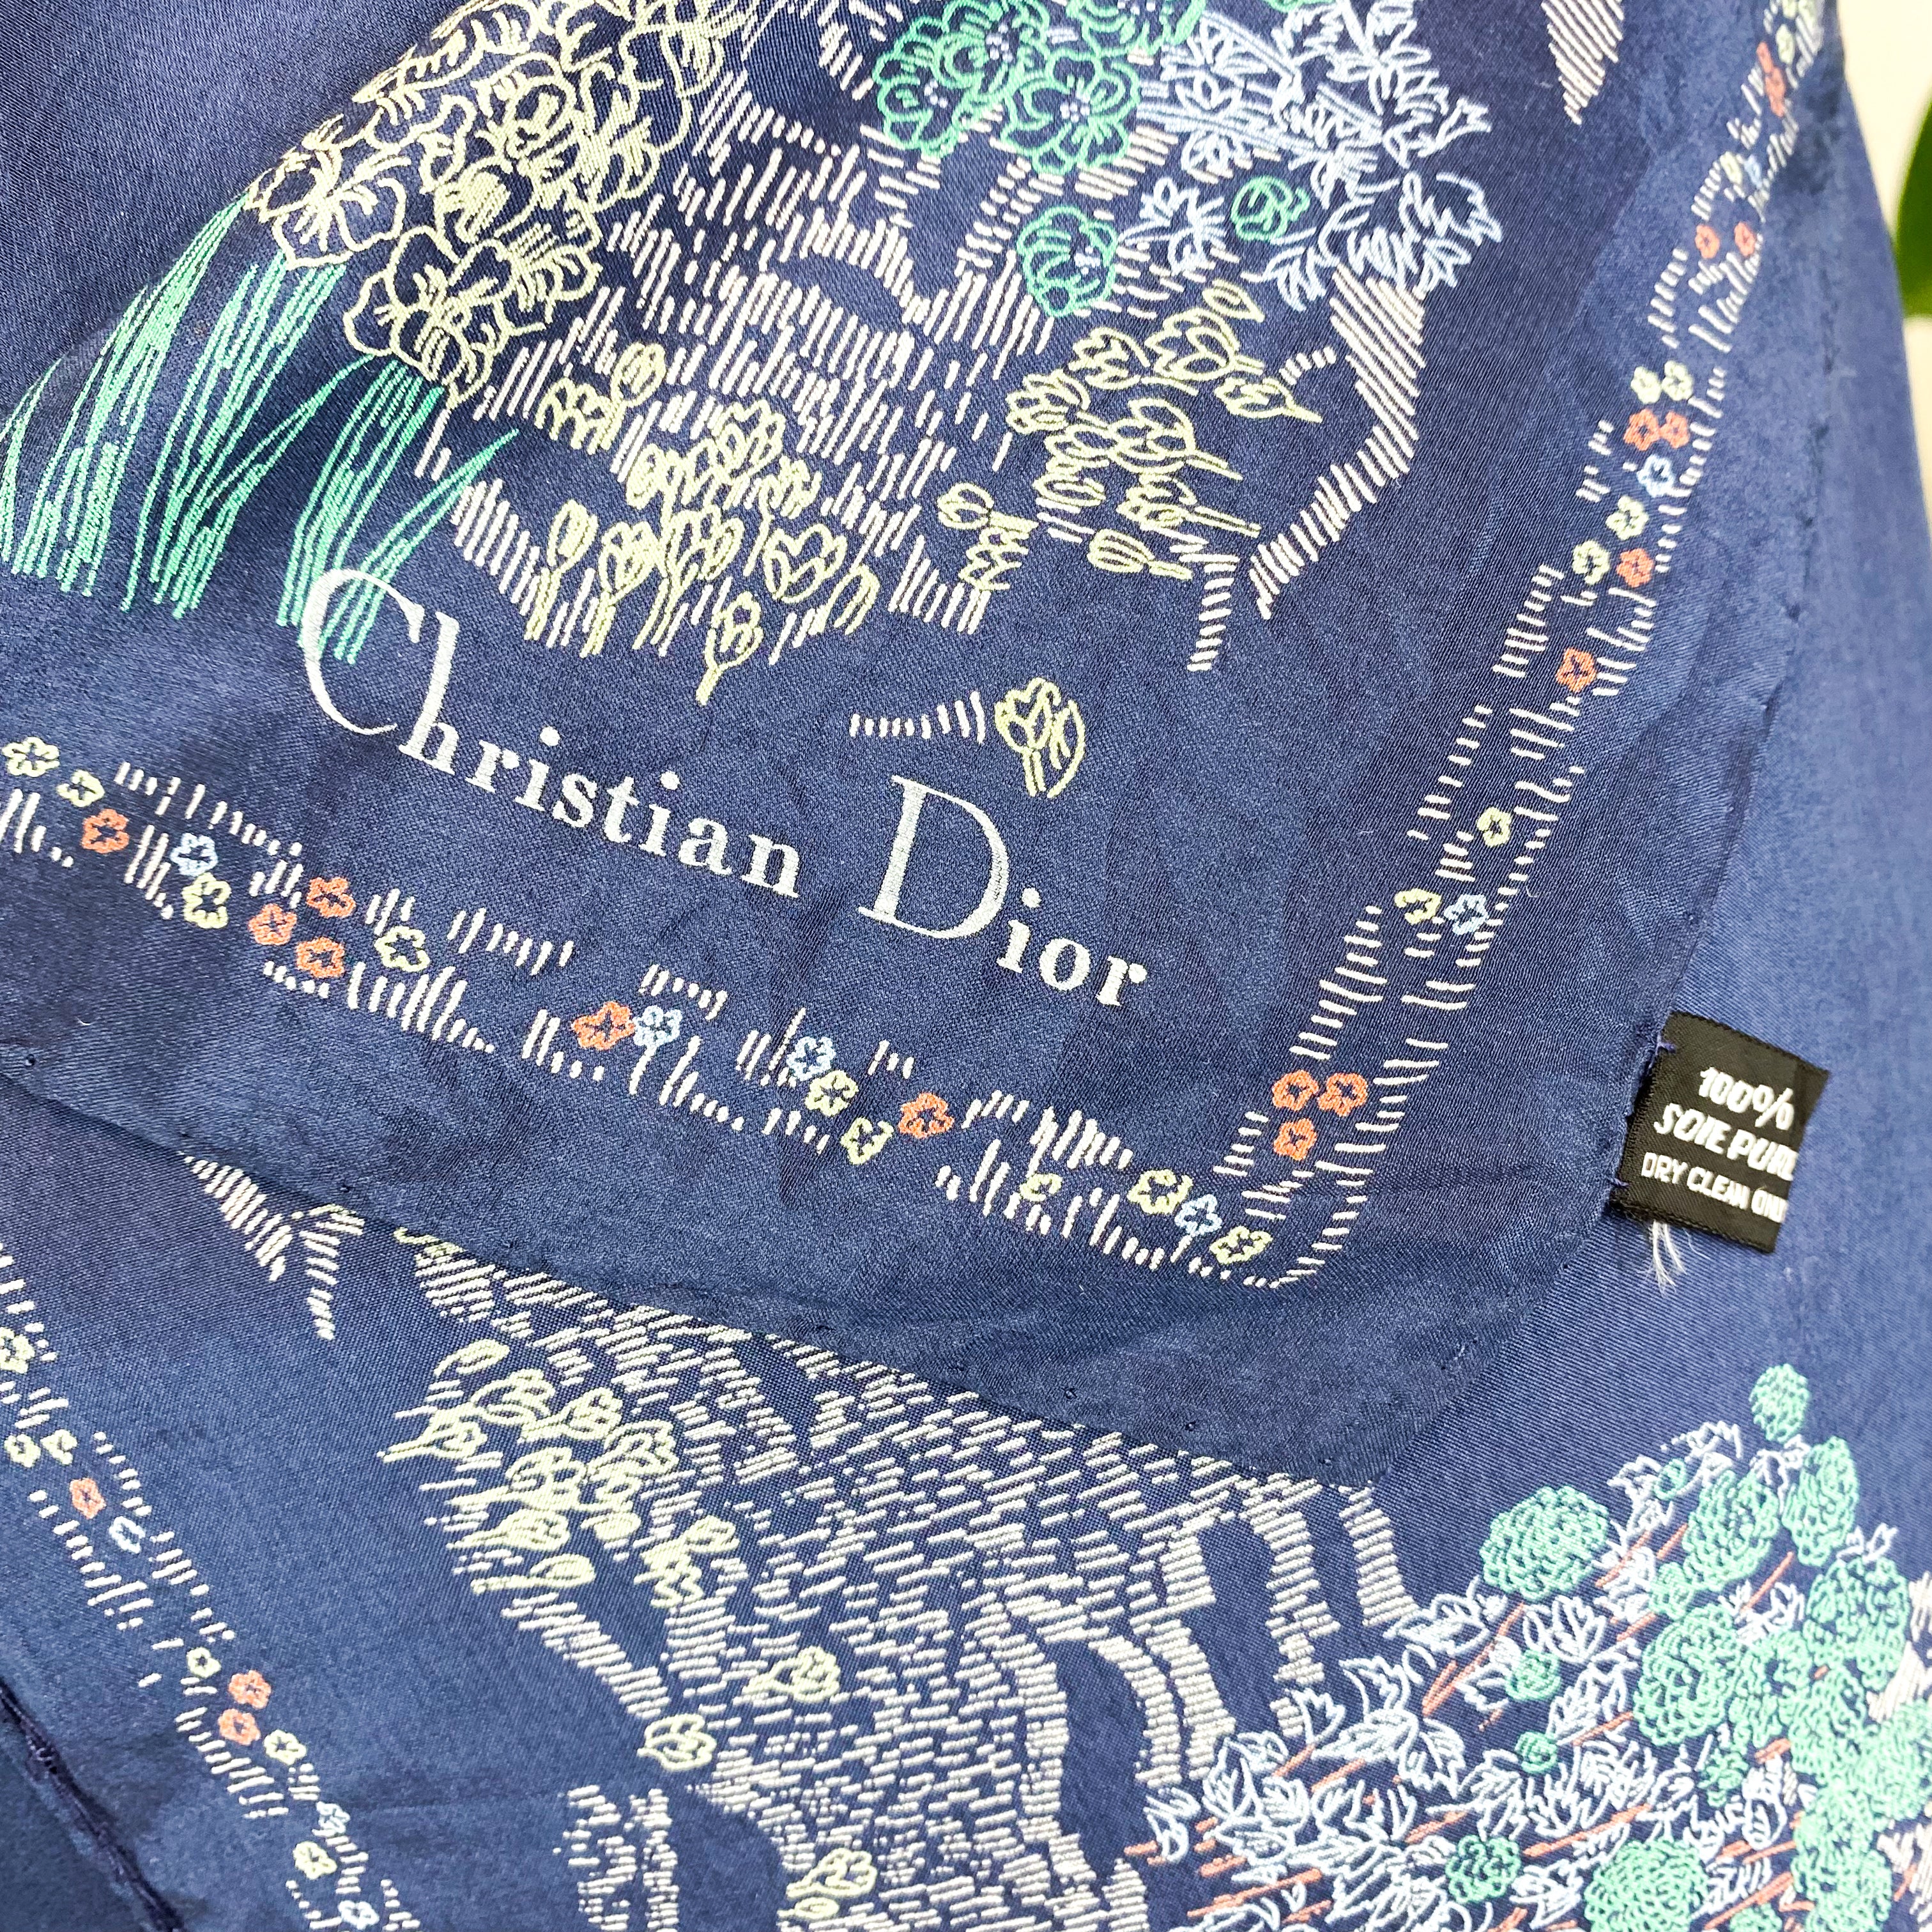 Christian Dior Vintage Silk Scarf